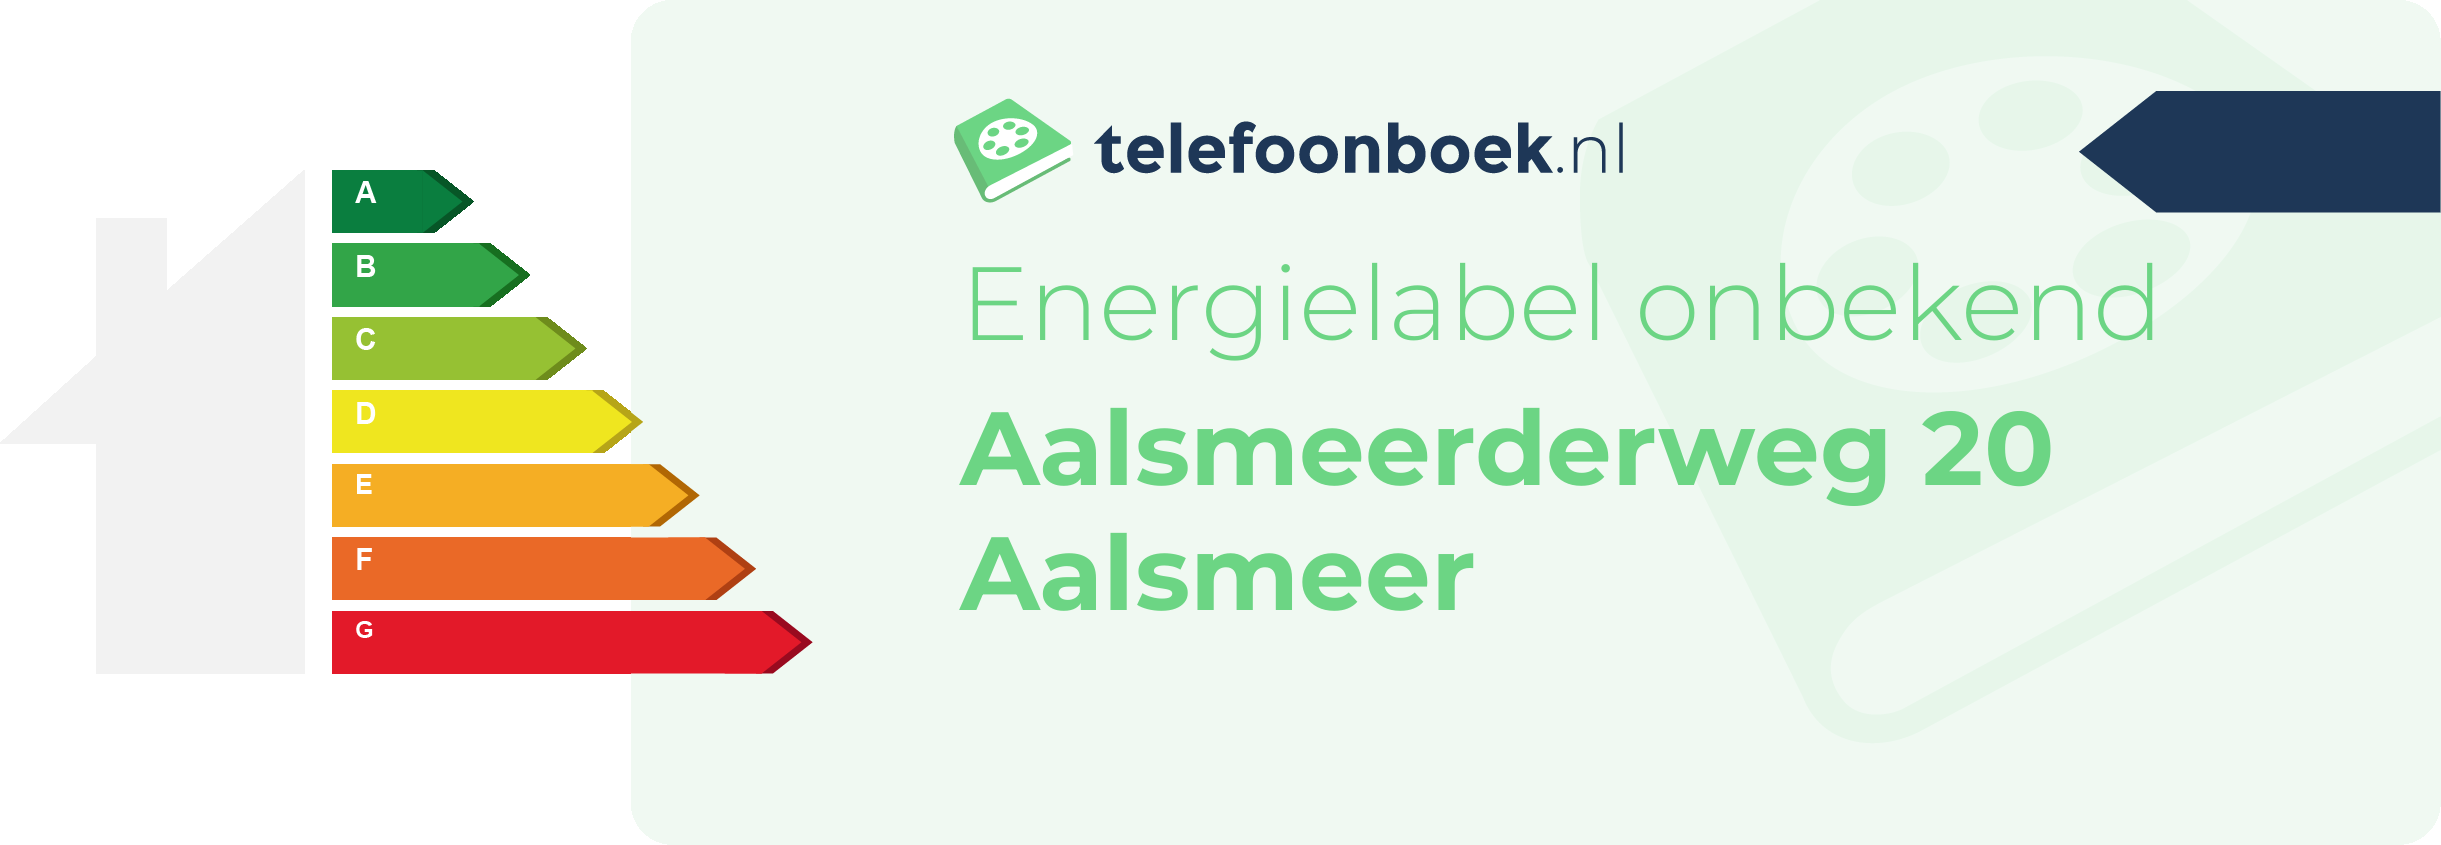 Energielabel Aalsmeerderweg 20 Aalsmeer